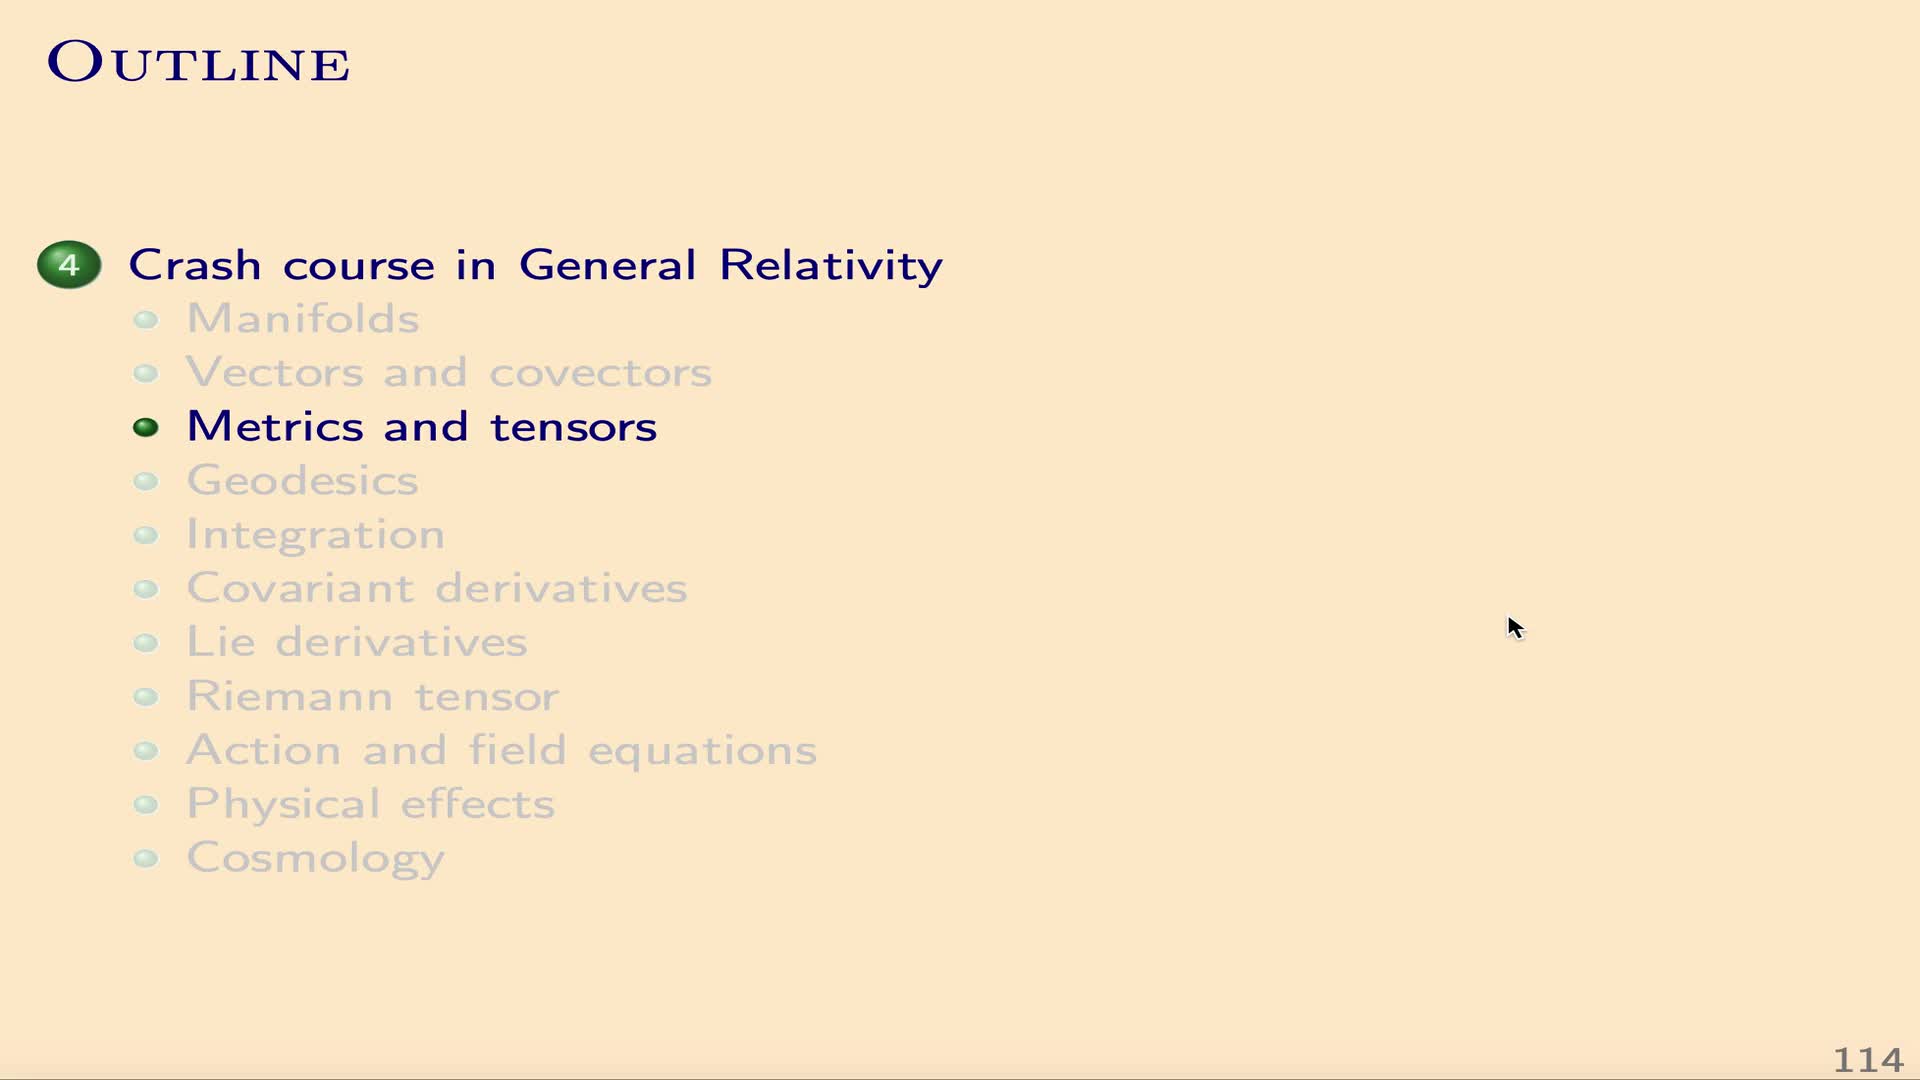 QG I: 4.3 - Metrics and tensors